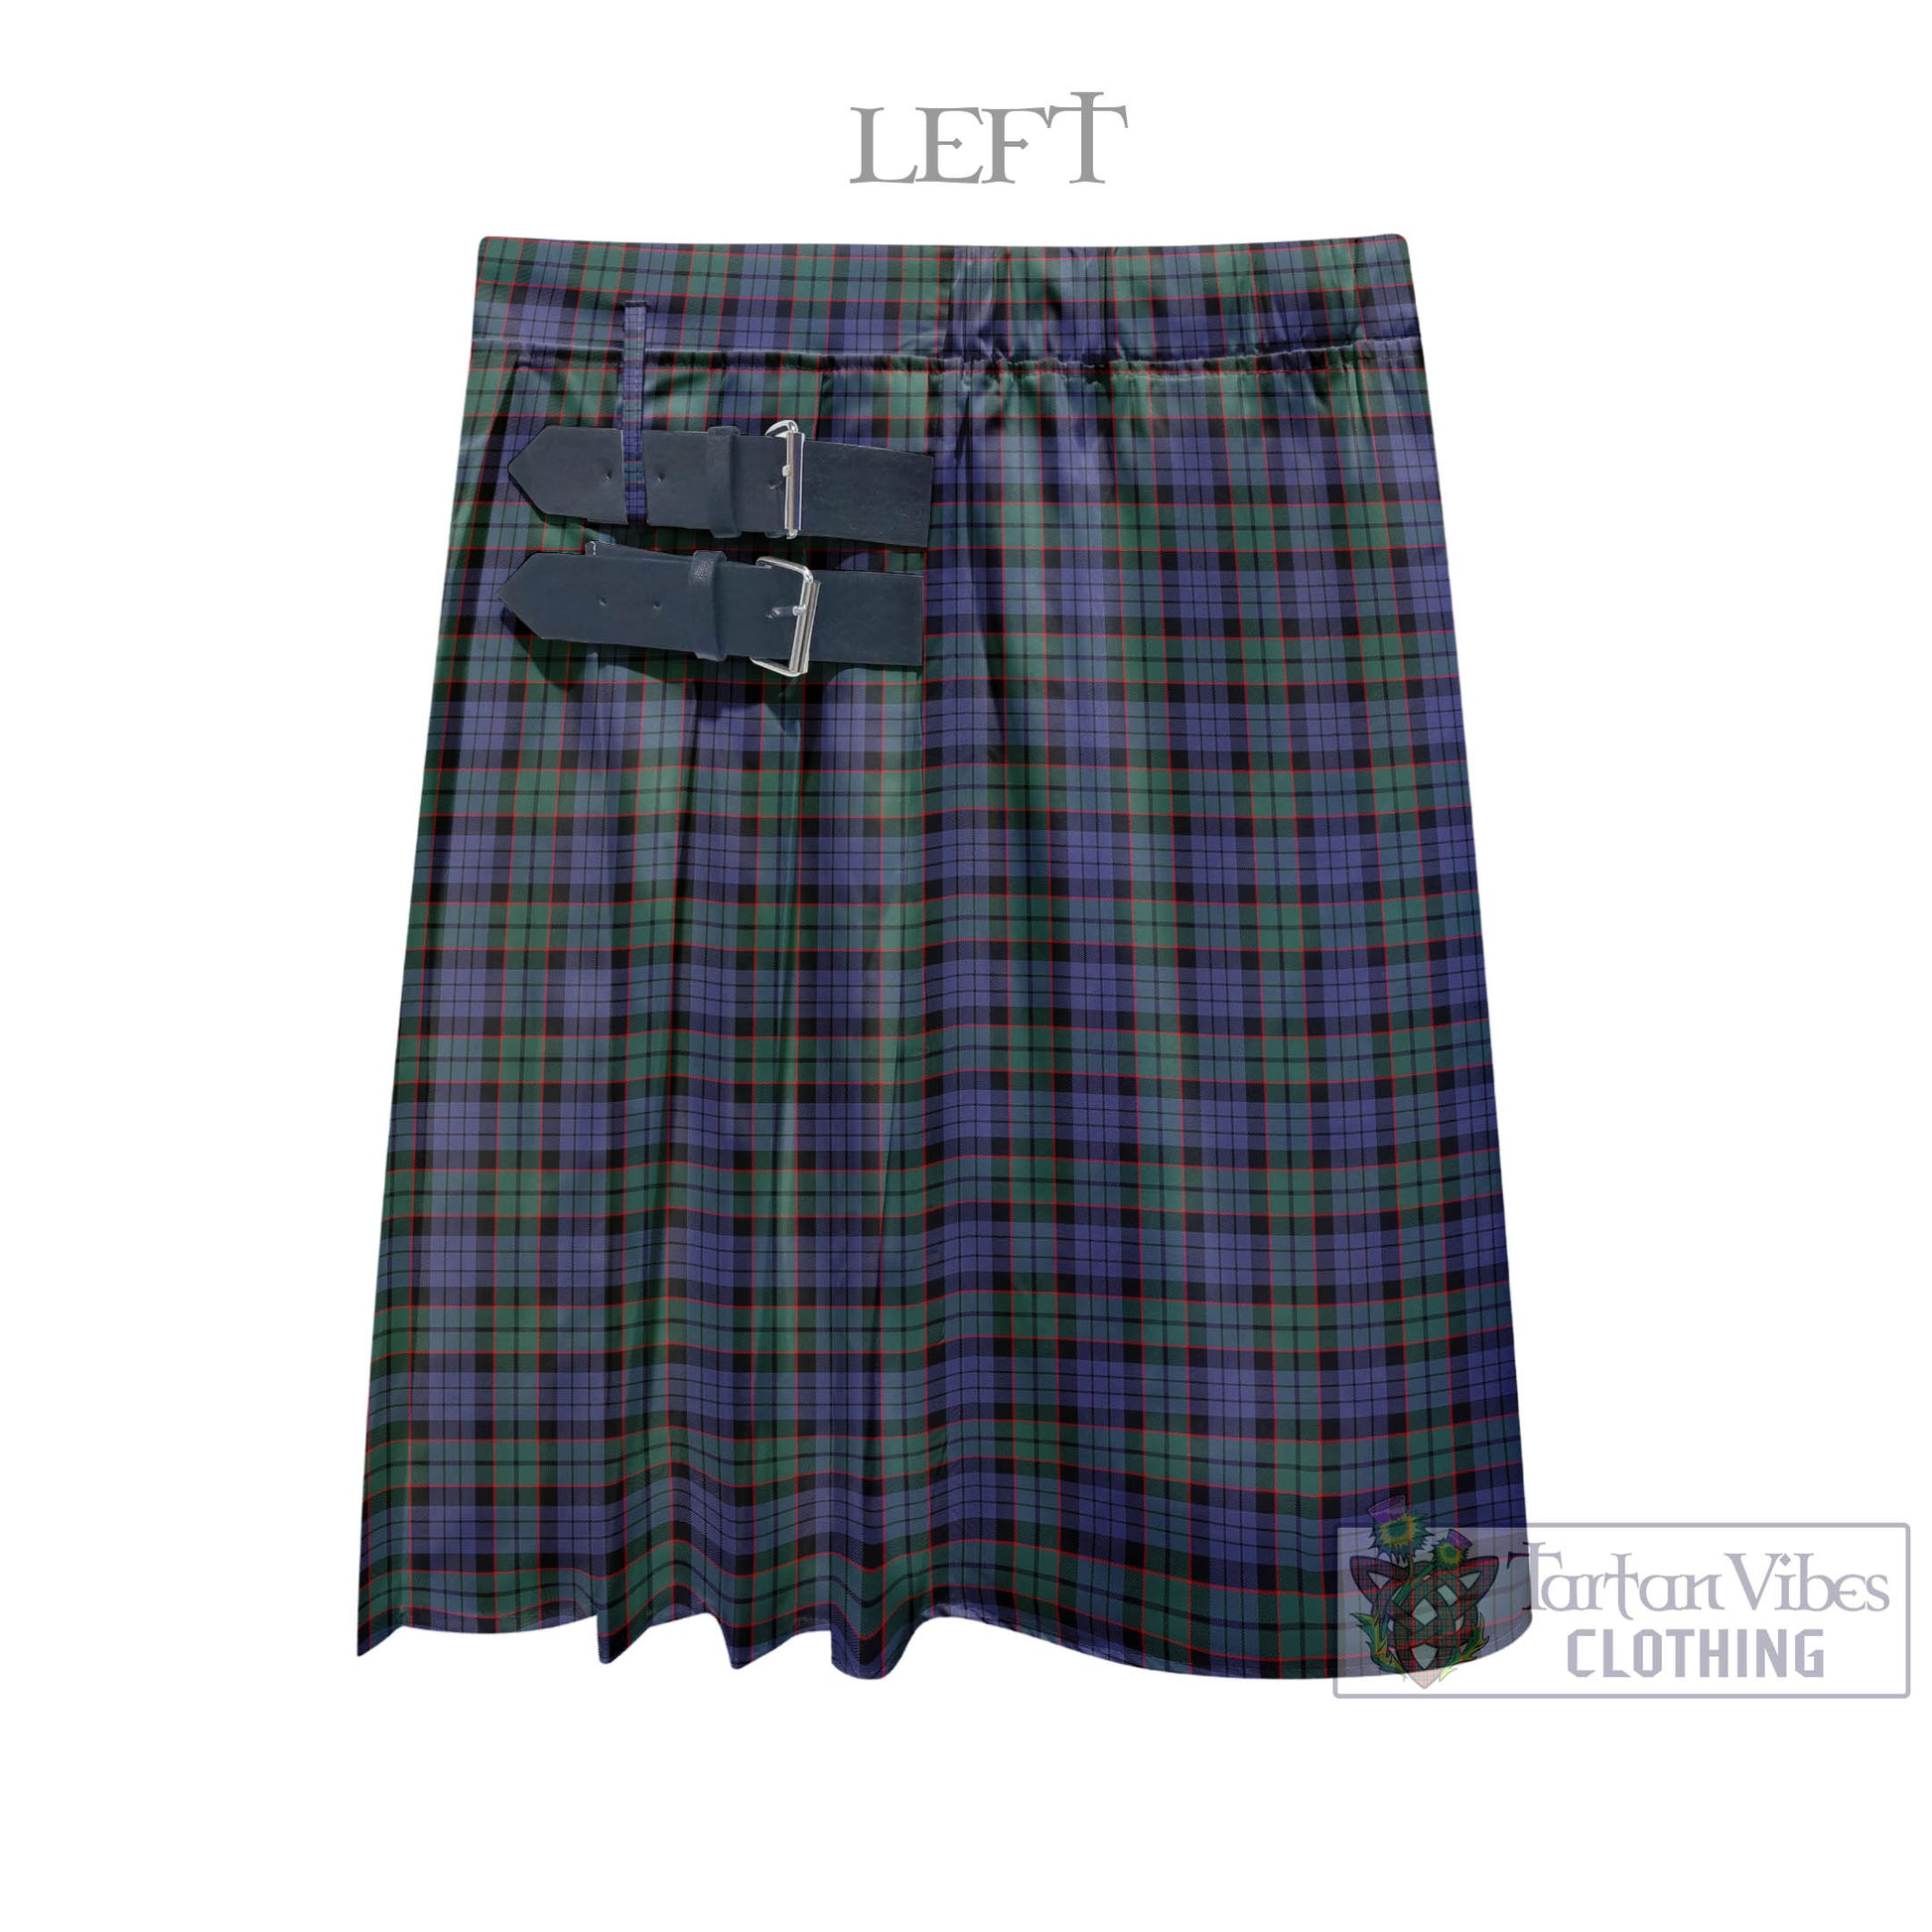 Tartan Vibes Clothing Fletcher Modern Tartan Men's Pleated Skirt - Fashion Casual Retro Scottish Style